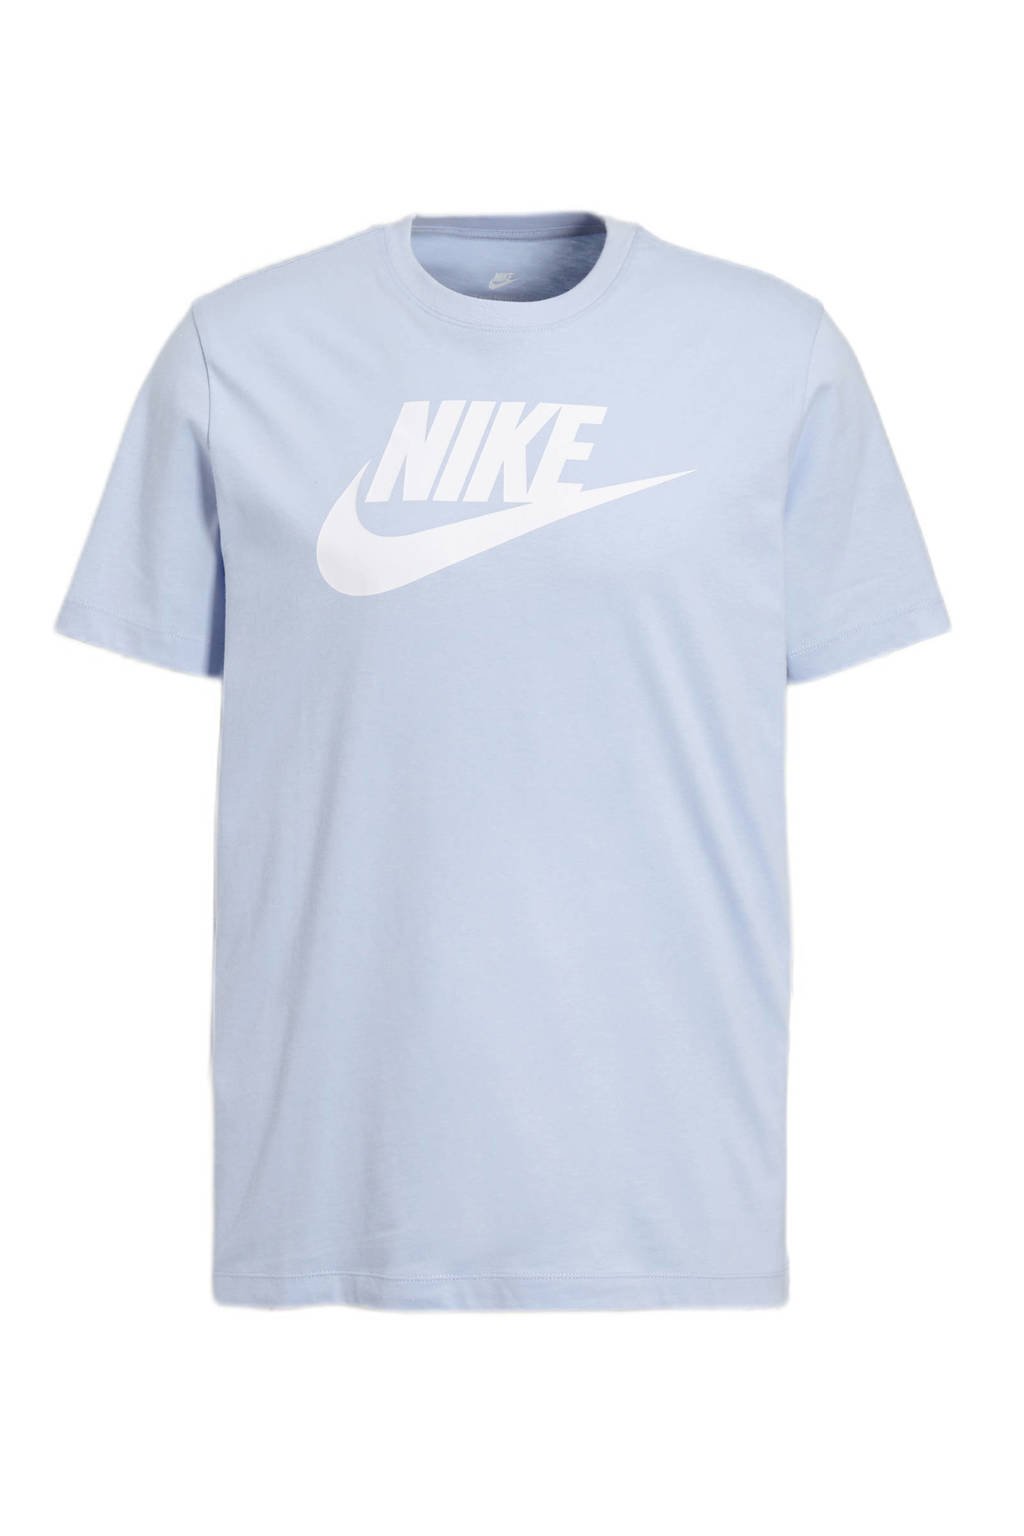 Nike sport T-shirt neon lichtpaars